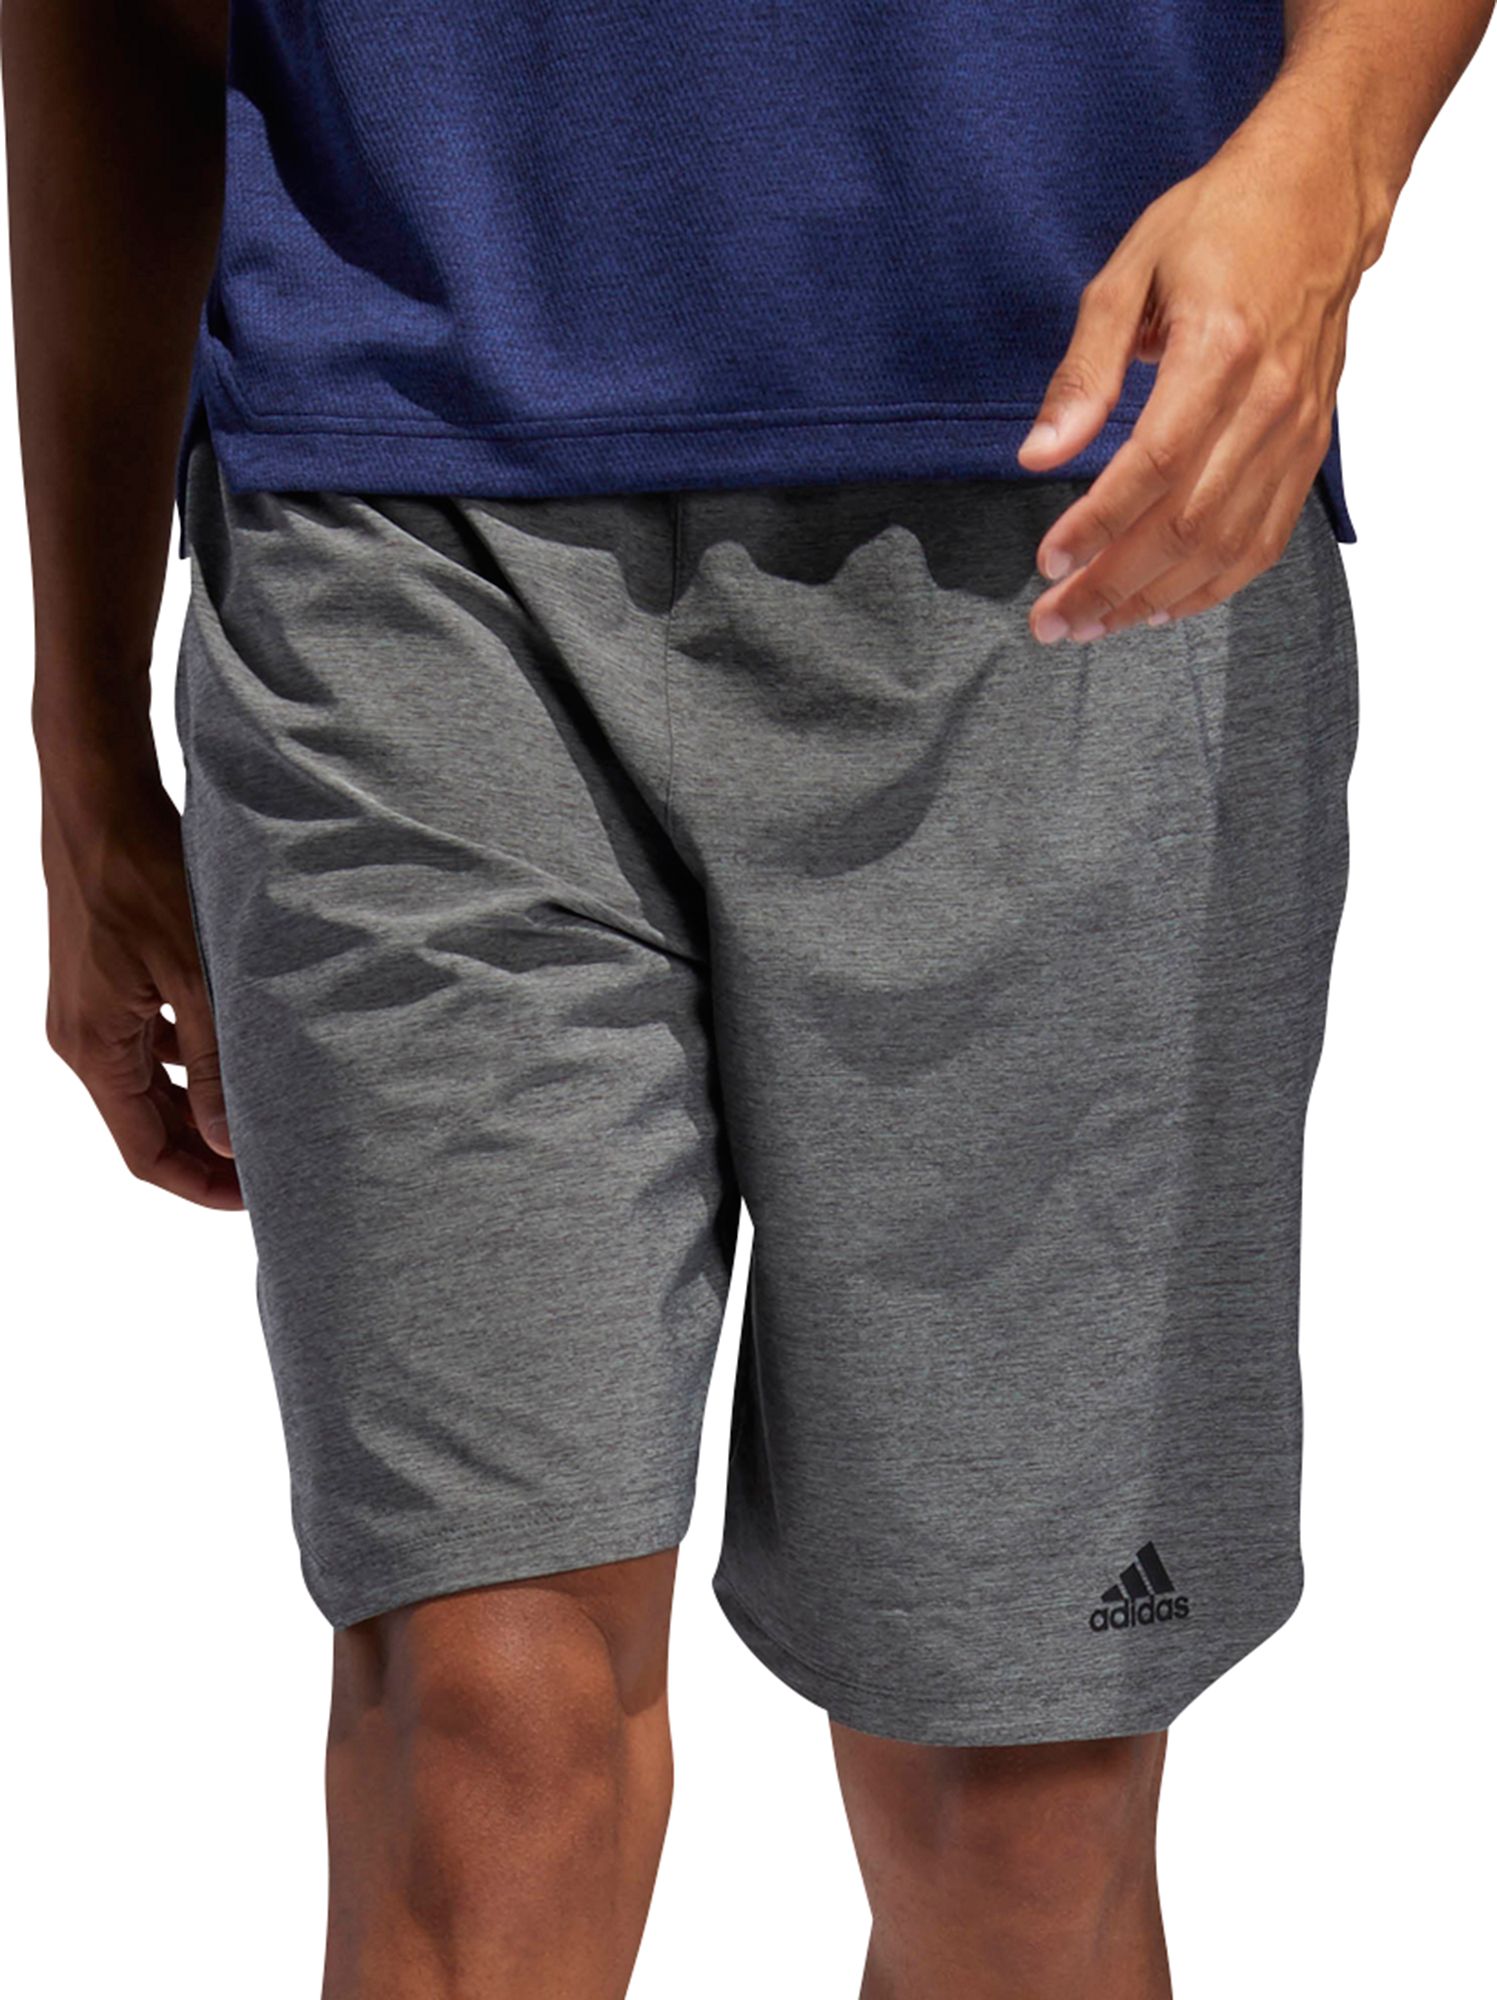 adidas Men's Axis Woven Training Shorts - .97 - .97